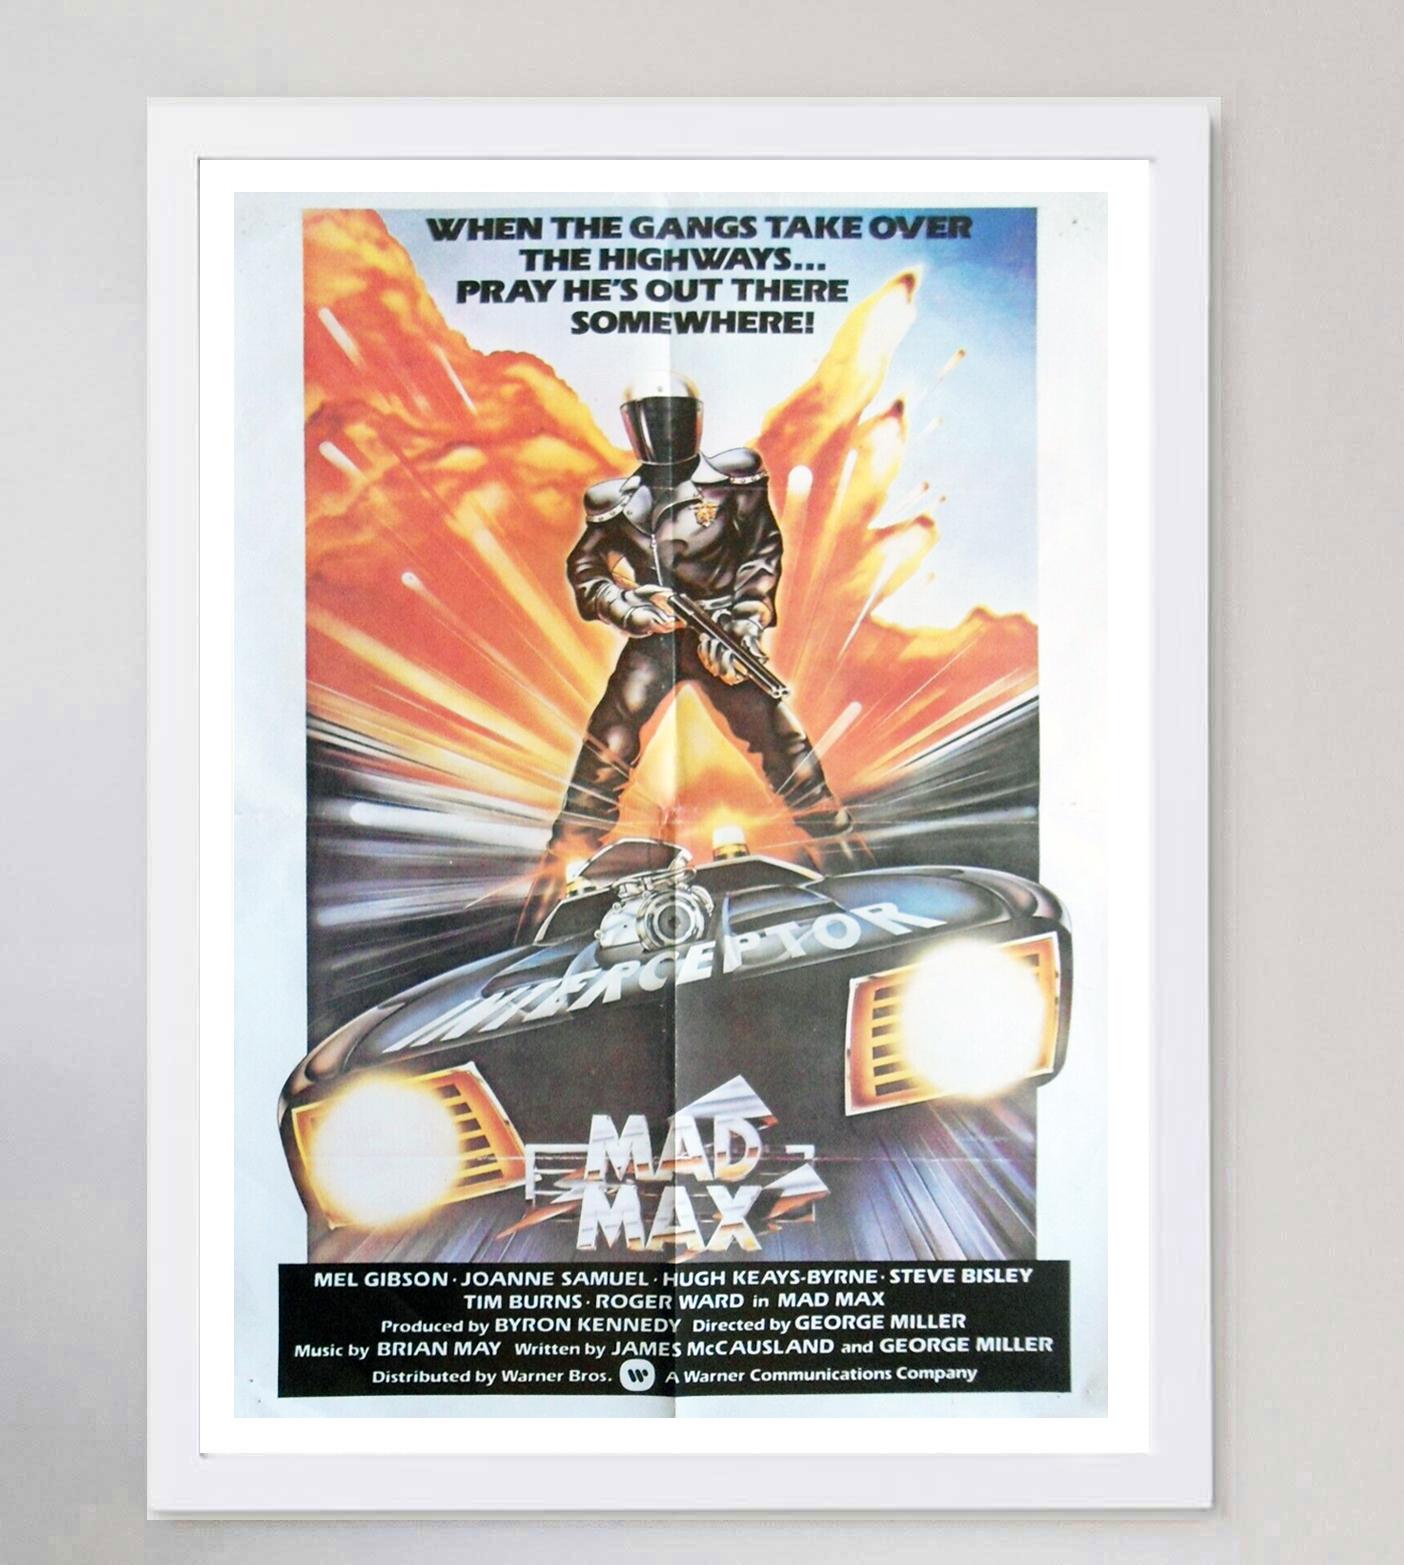 American 1979 Mad Max Original Vintage Poster For Sale